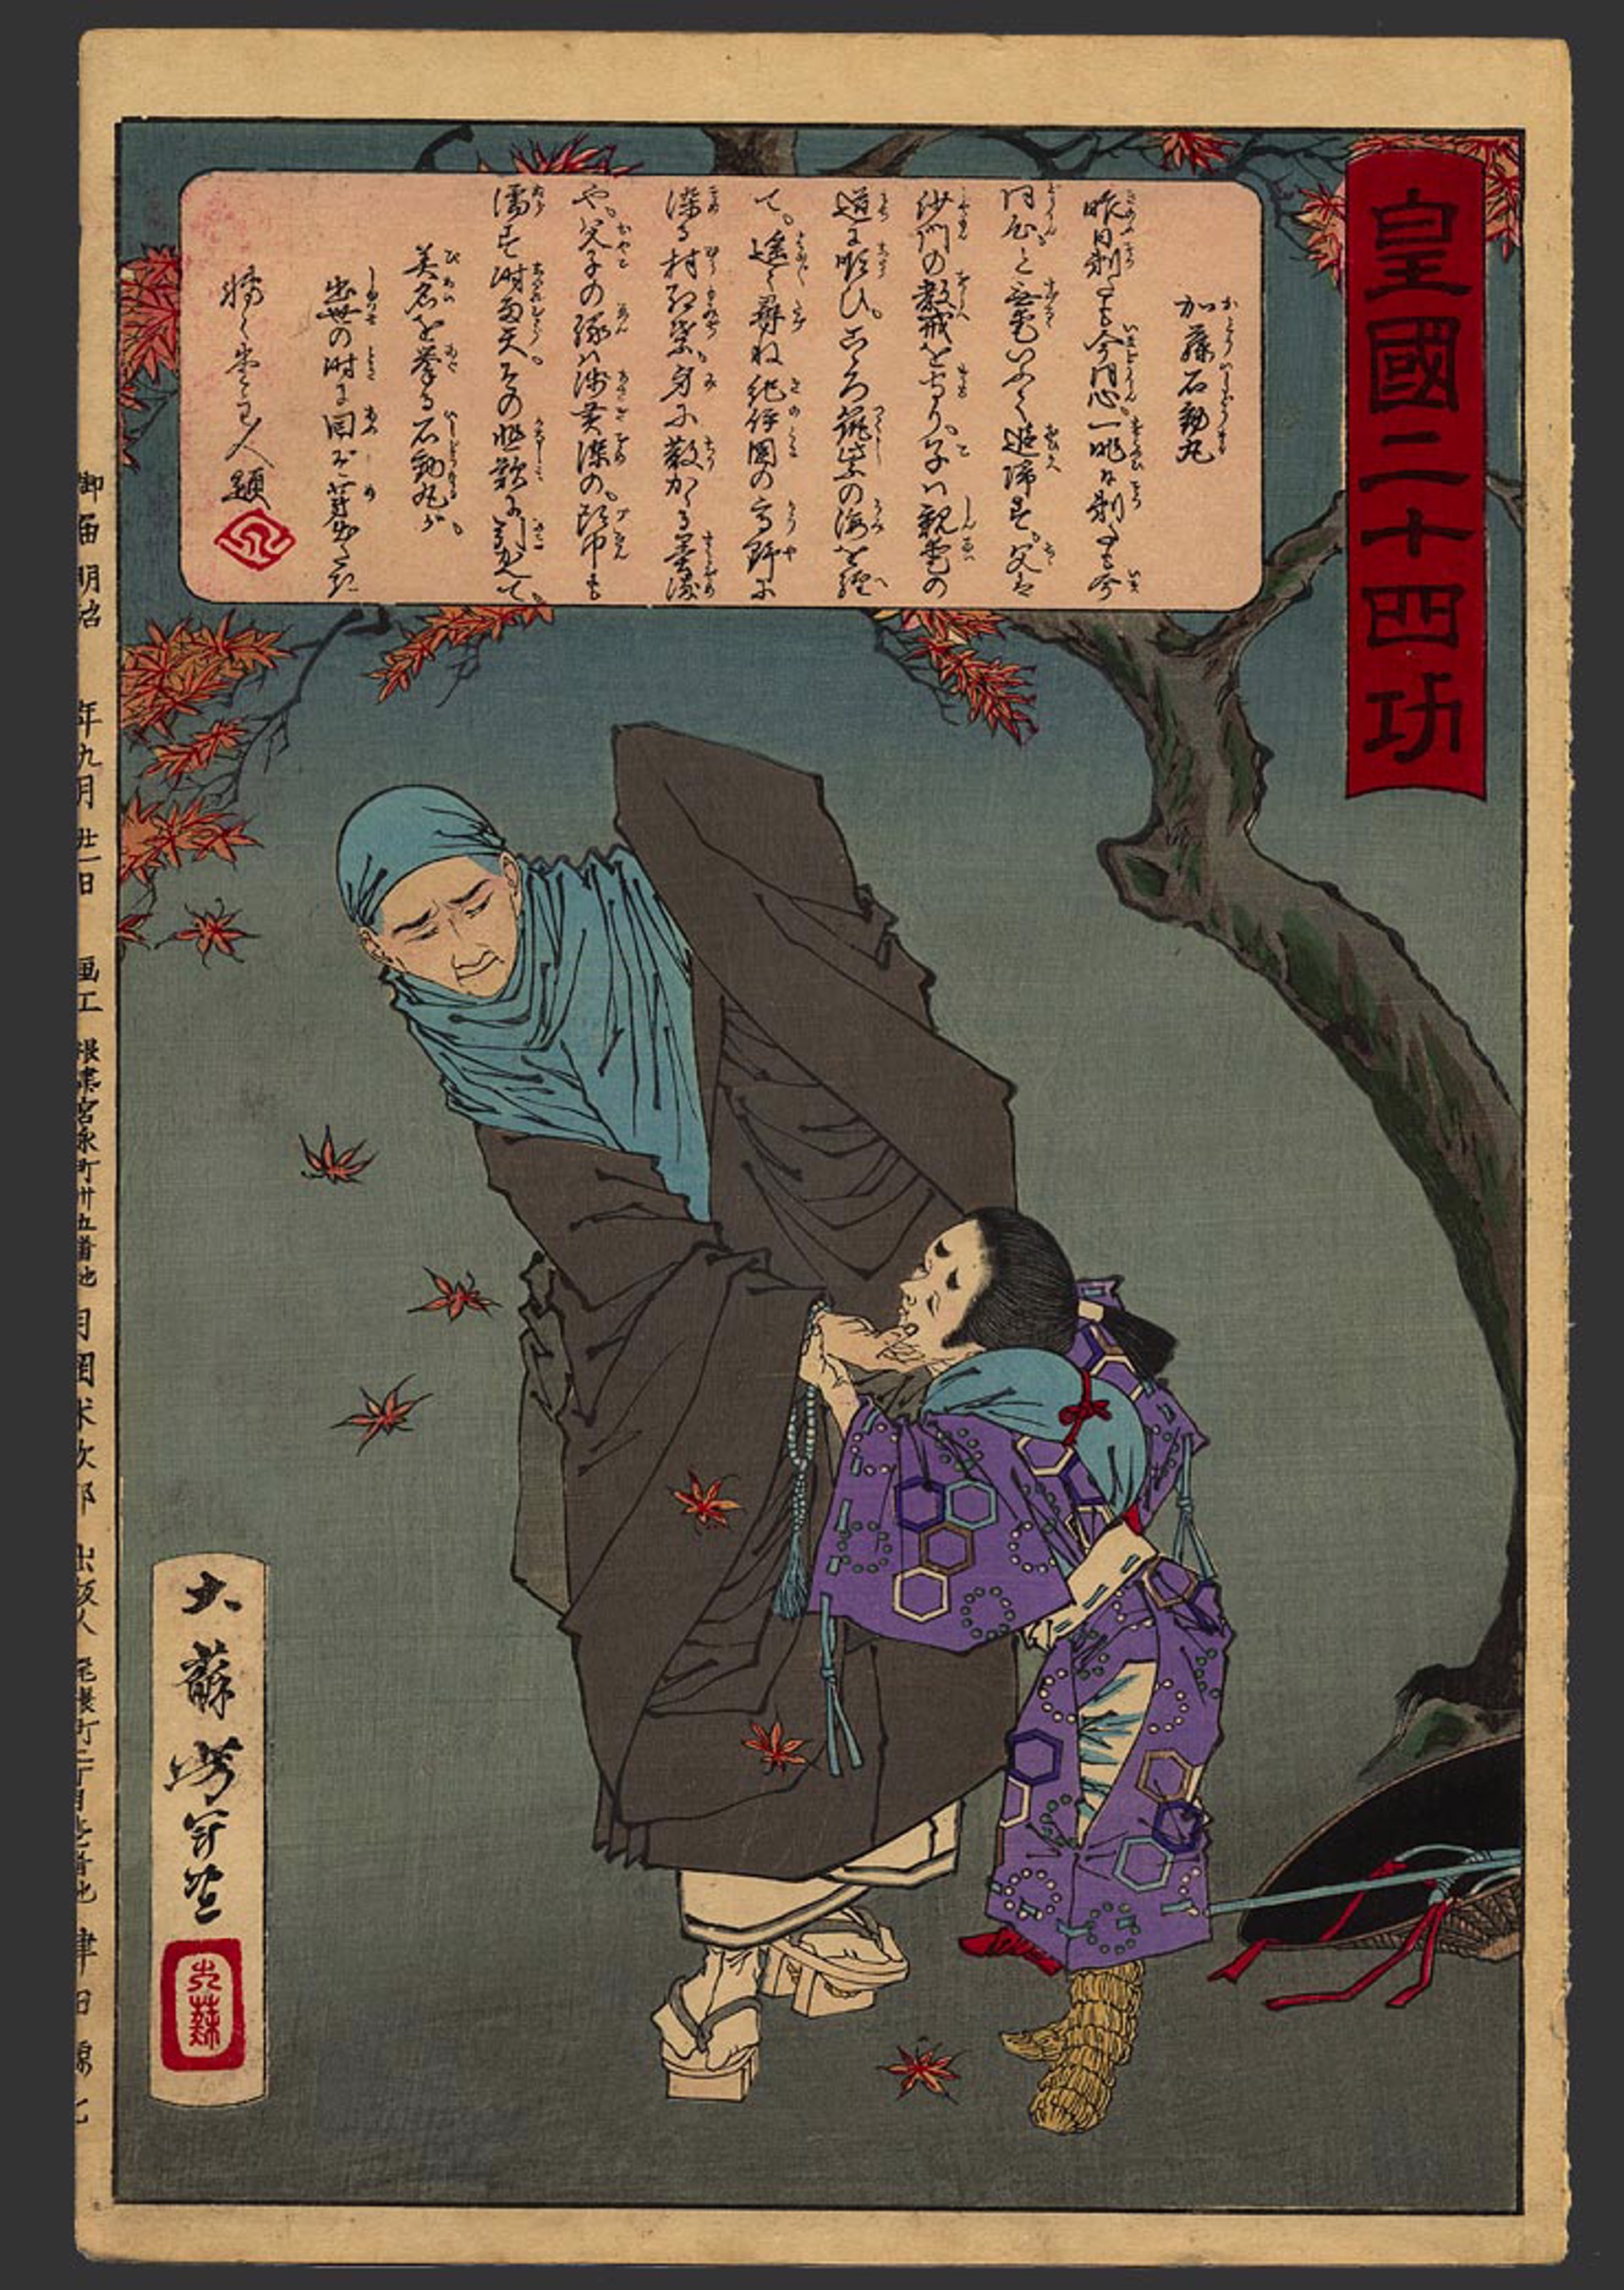 #10 Kato Ishidomaru visiting his father Kato Sayemon Shigeuji 24 Accomplishments in Imperial Japan by Yoshitoshi